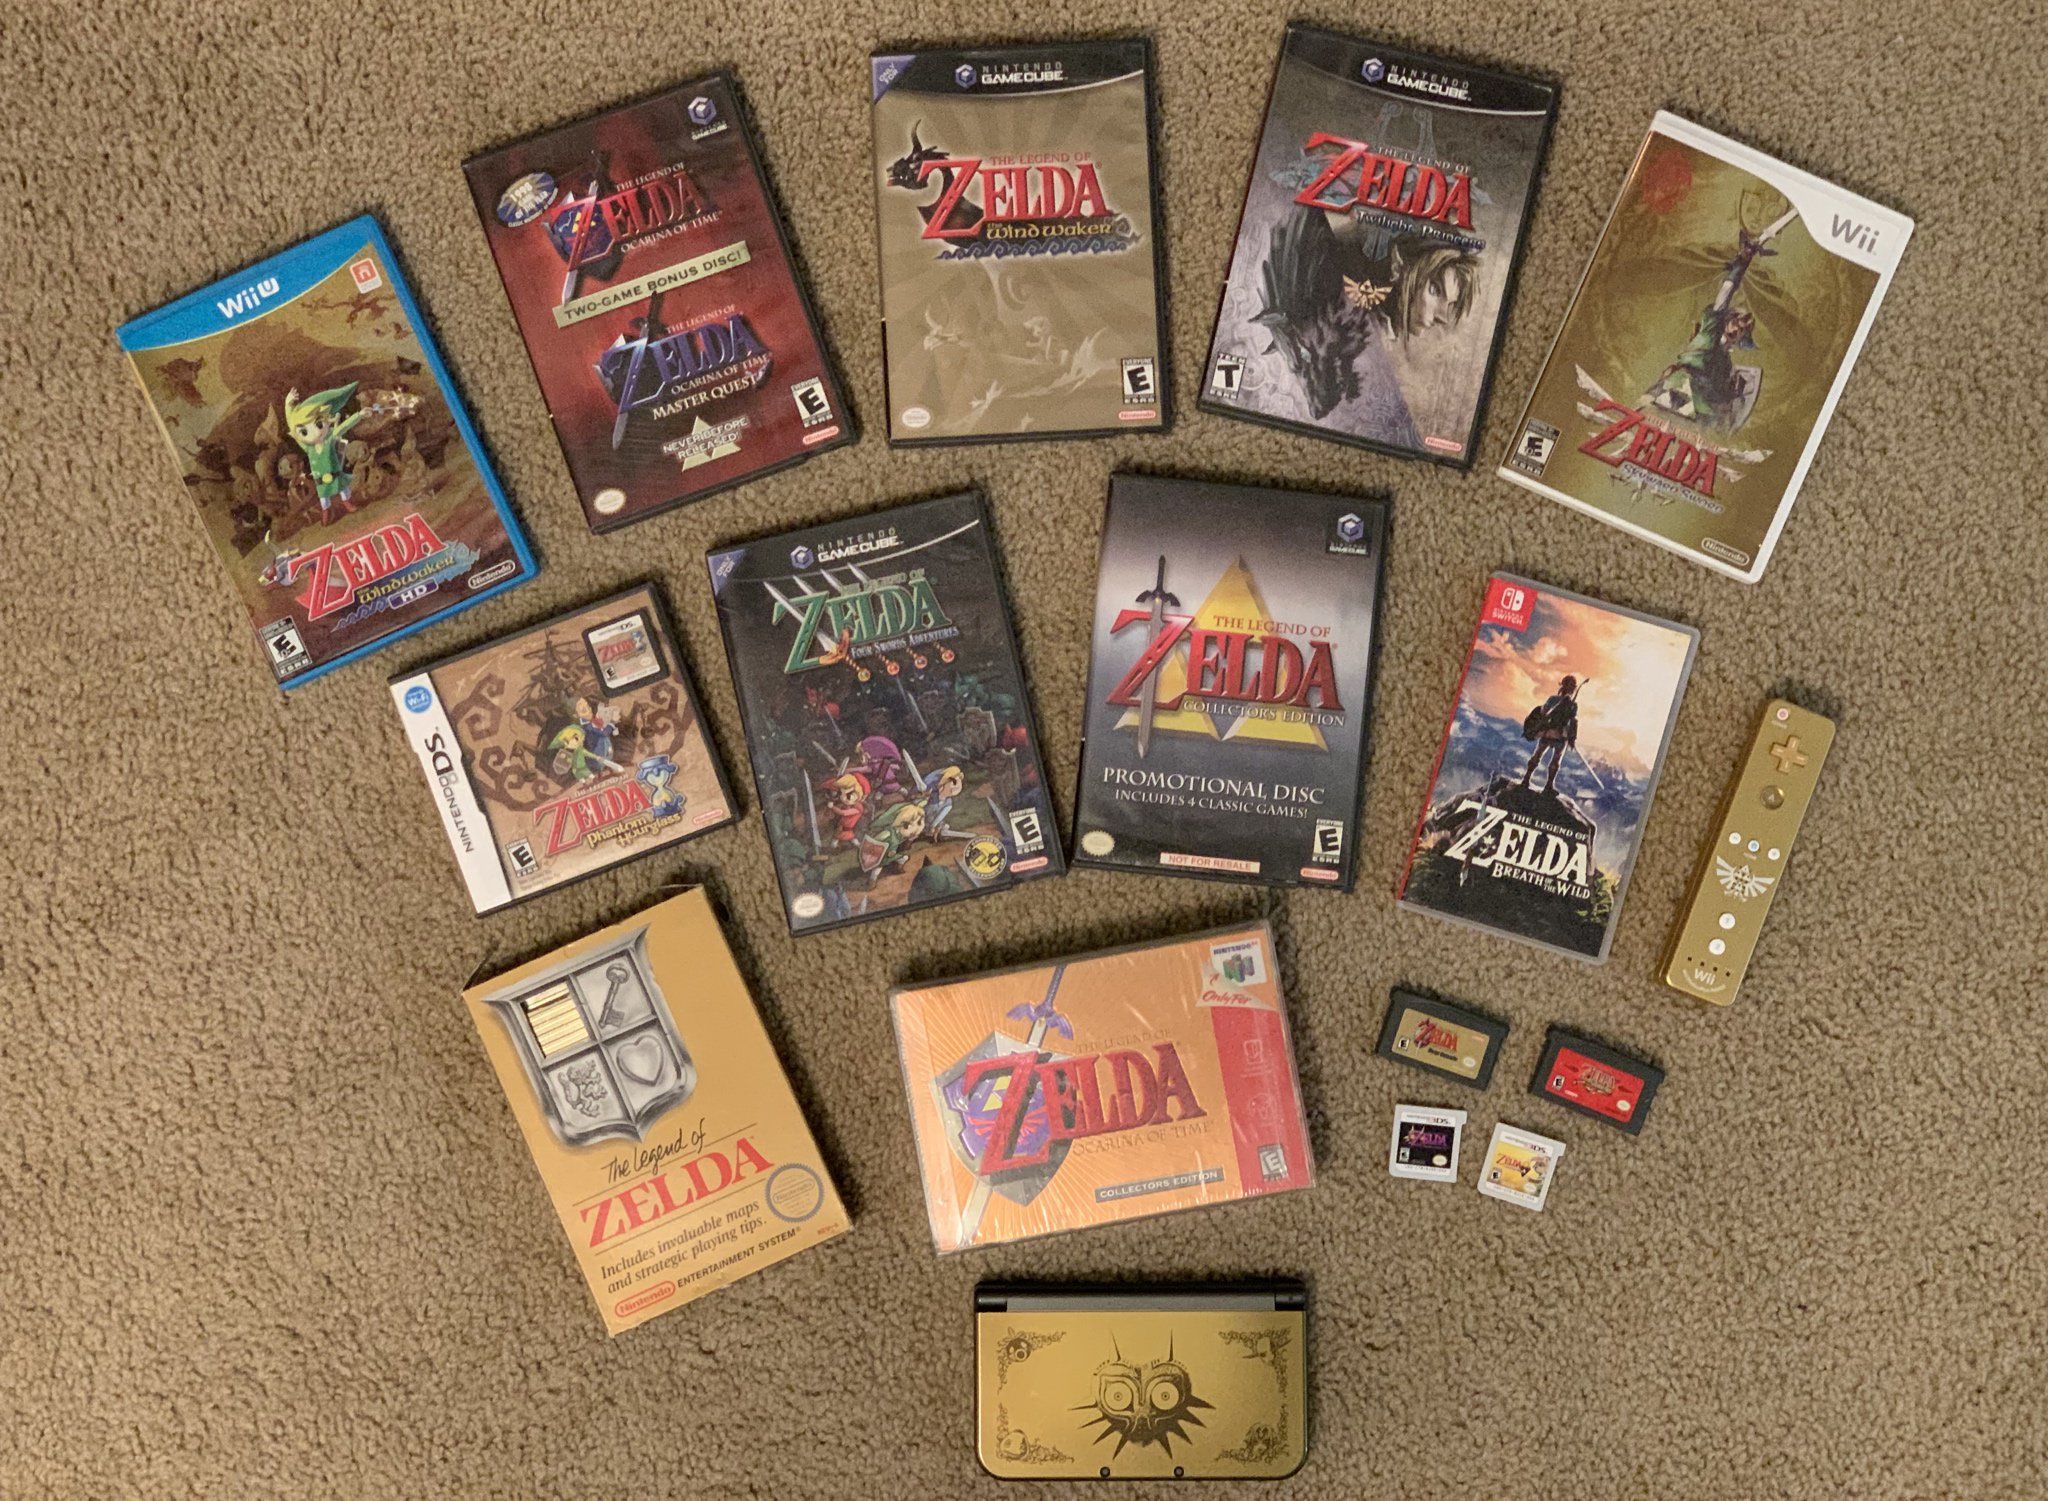 Max's Collection of Zelda Games